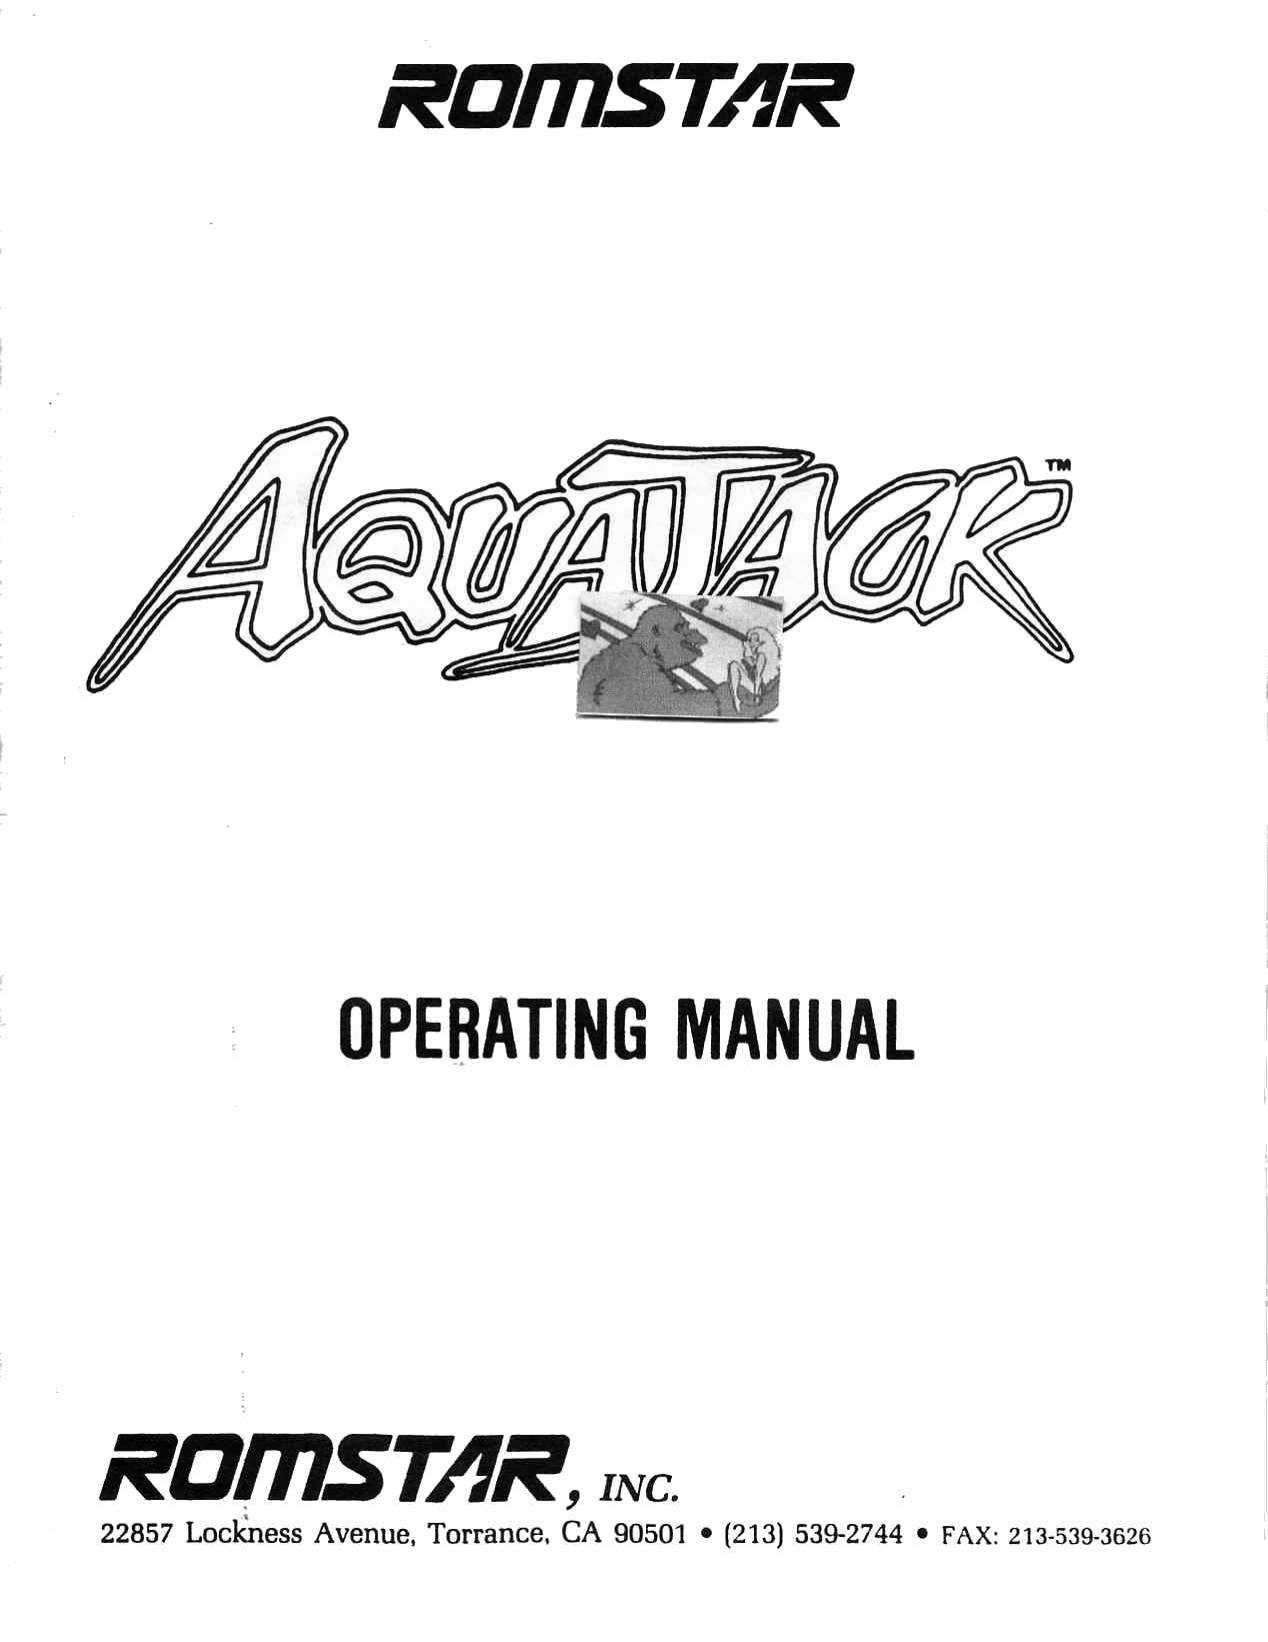 AquaJack Manual